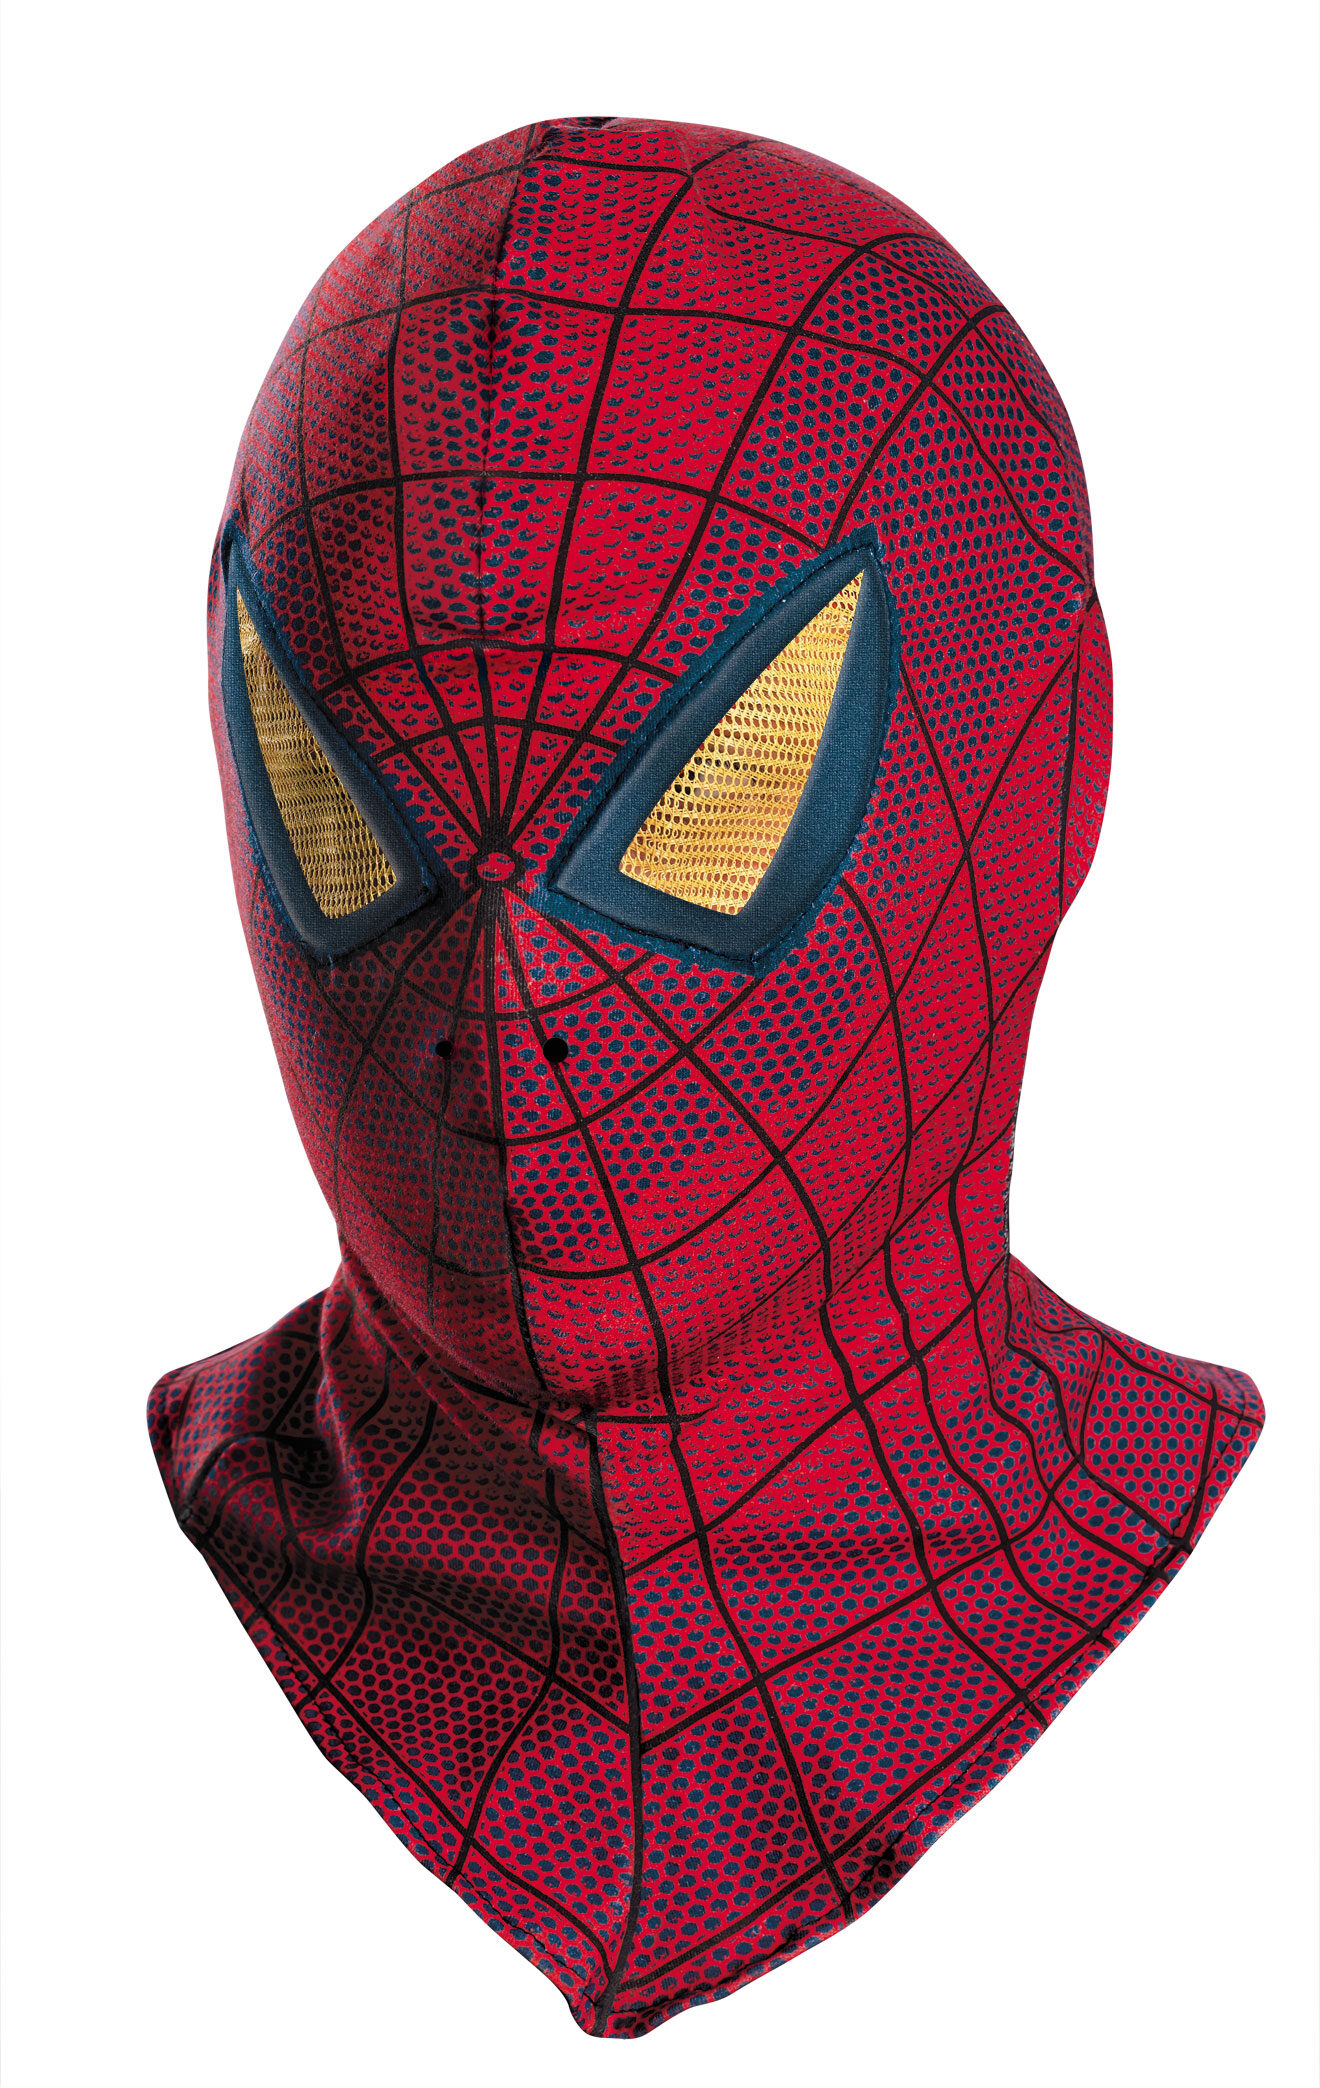 the amazing spider man mask